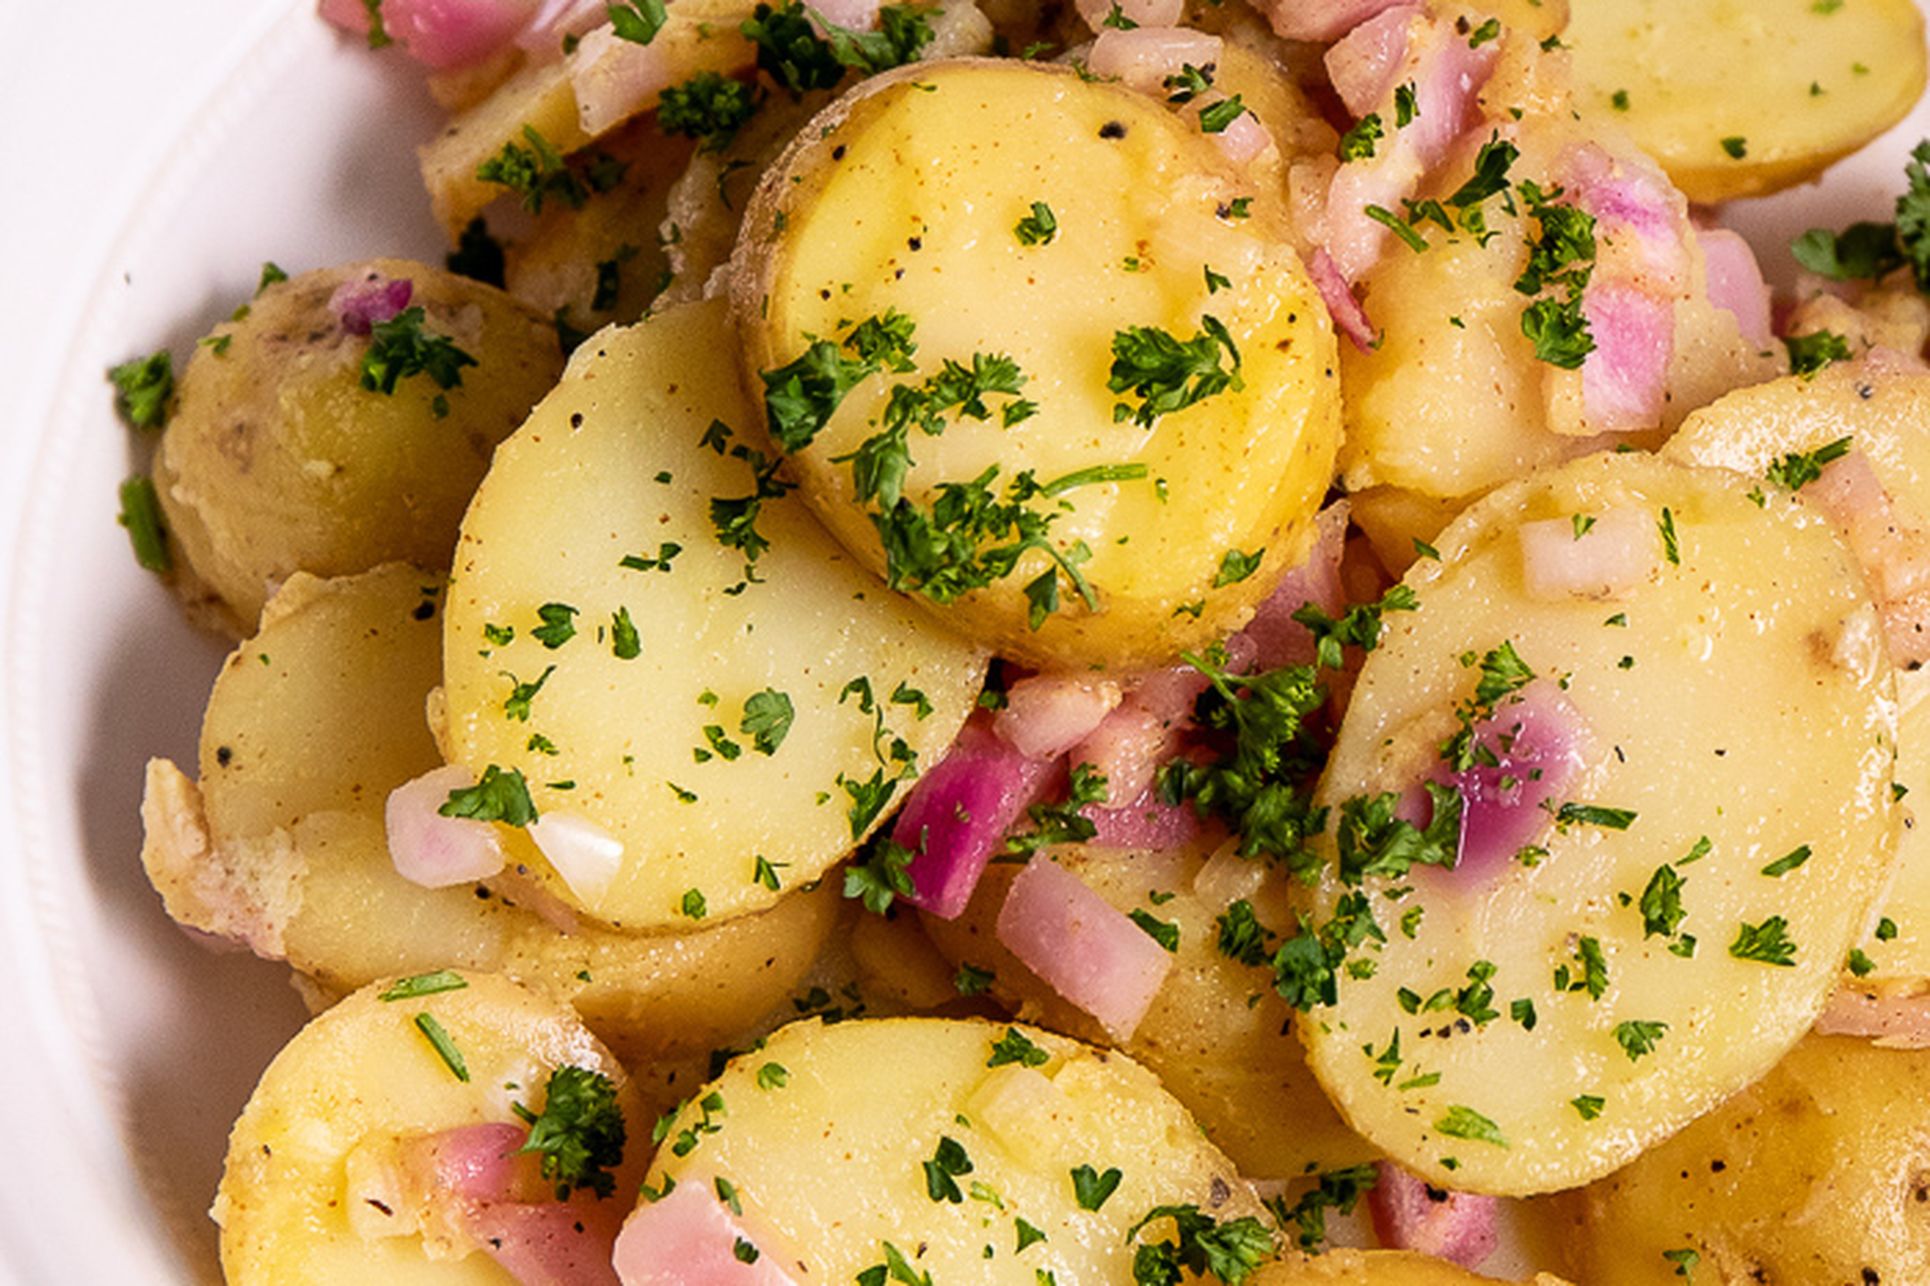 Best Vegan German Potato Salad Recipe - How To Make Healthy Potato Salad